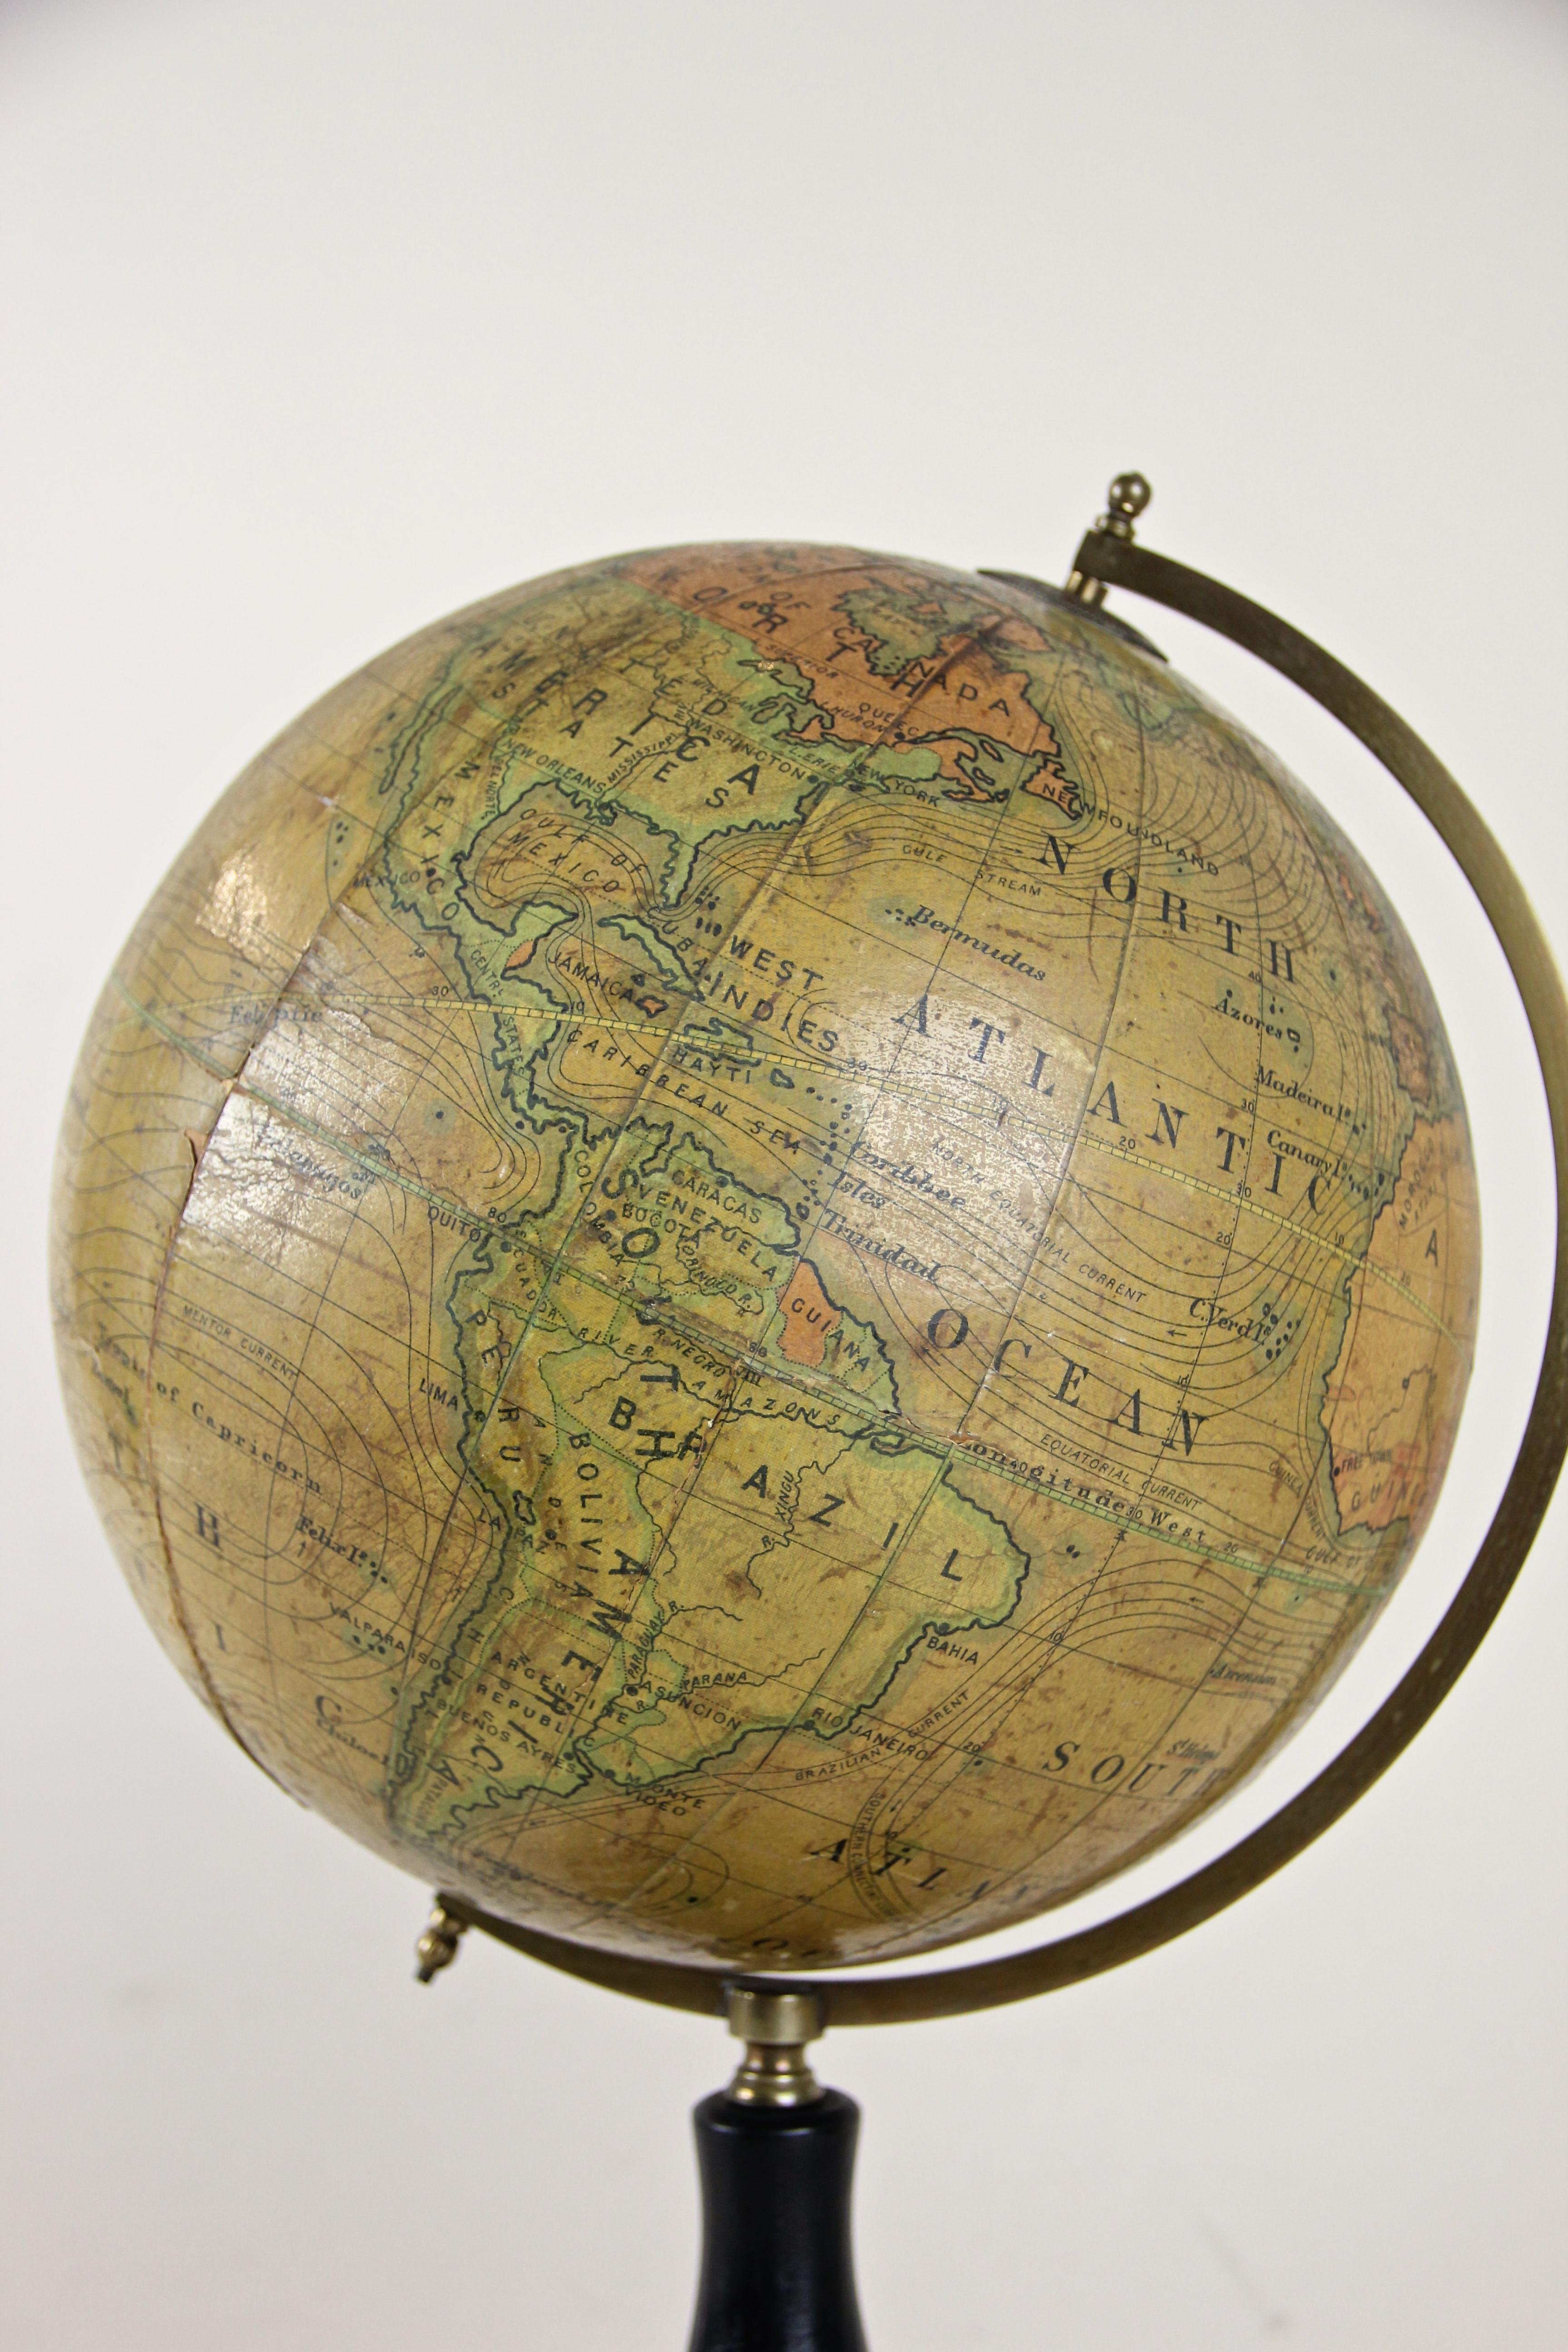 19th century globe